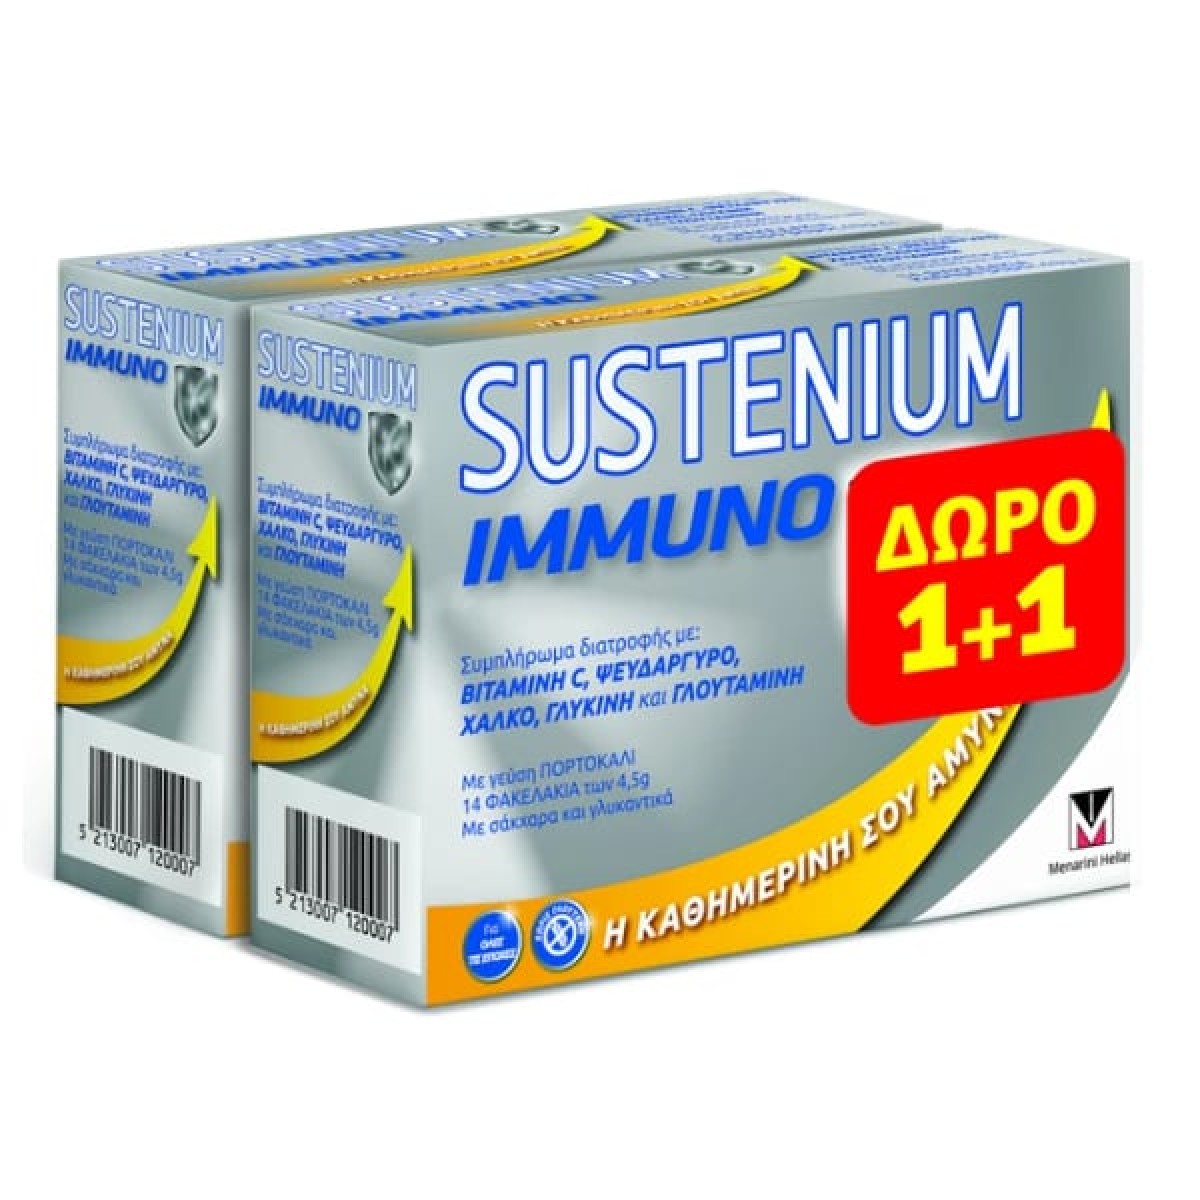  Sustenium | Immuno | Συμπλήρωμα για την Ενίσχυση του Ανοσοποιητικού 1 + 1 Δώρο | 28 φακελίσκοι Πορτοκάλι